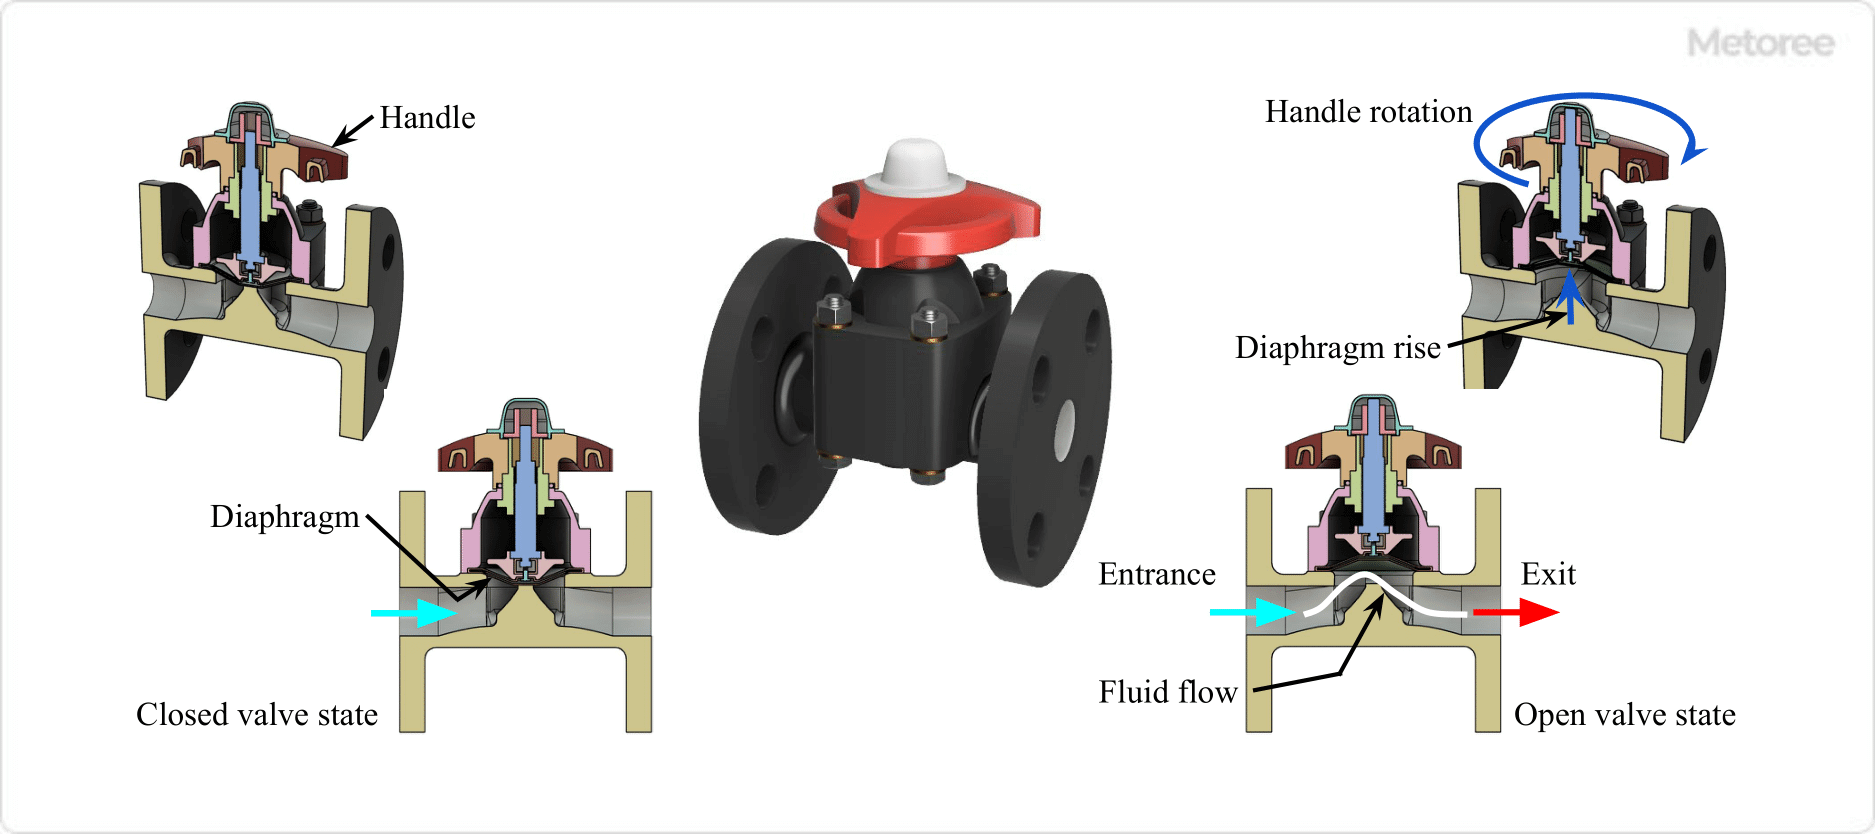 Figure 7. Diaphragm valve